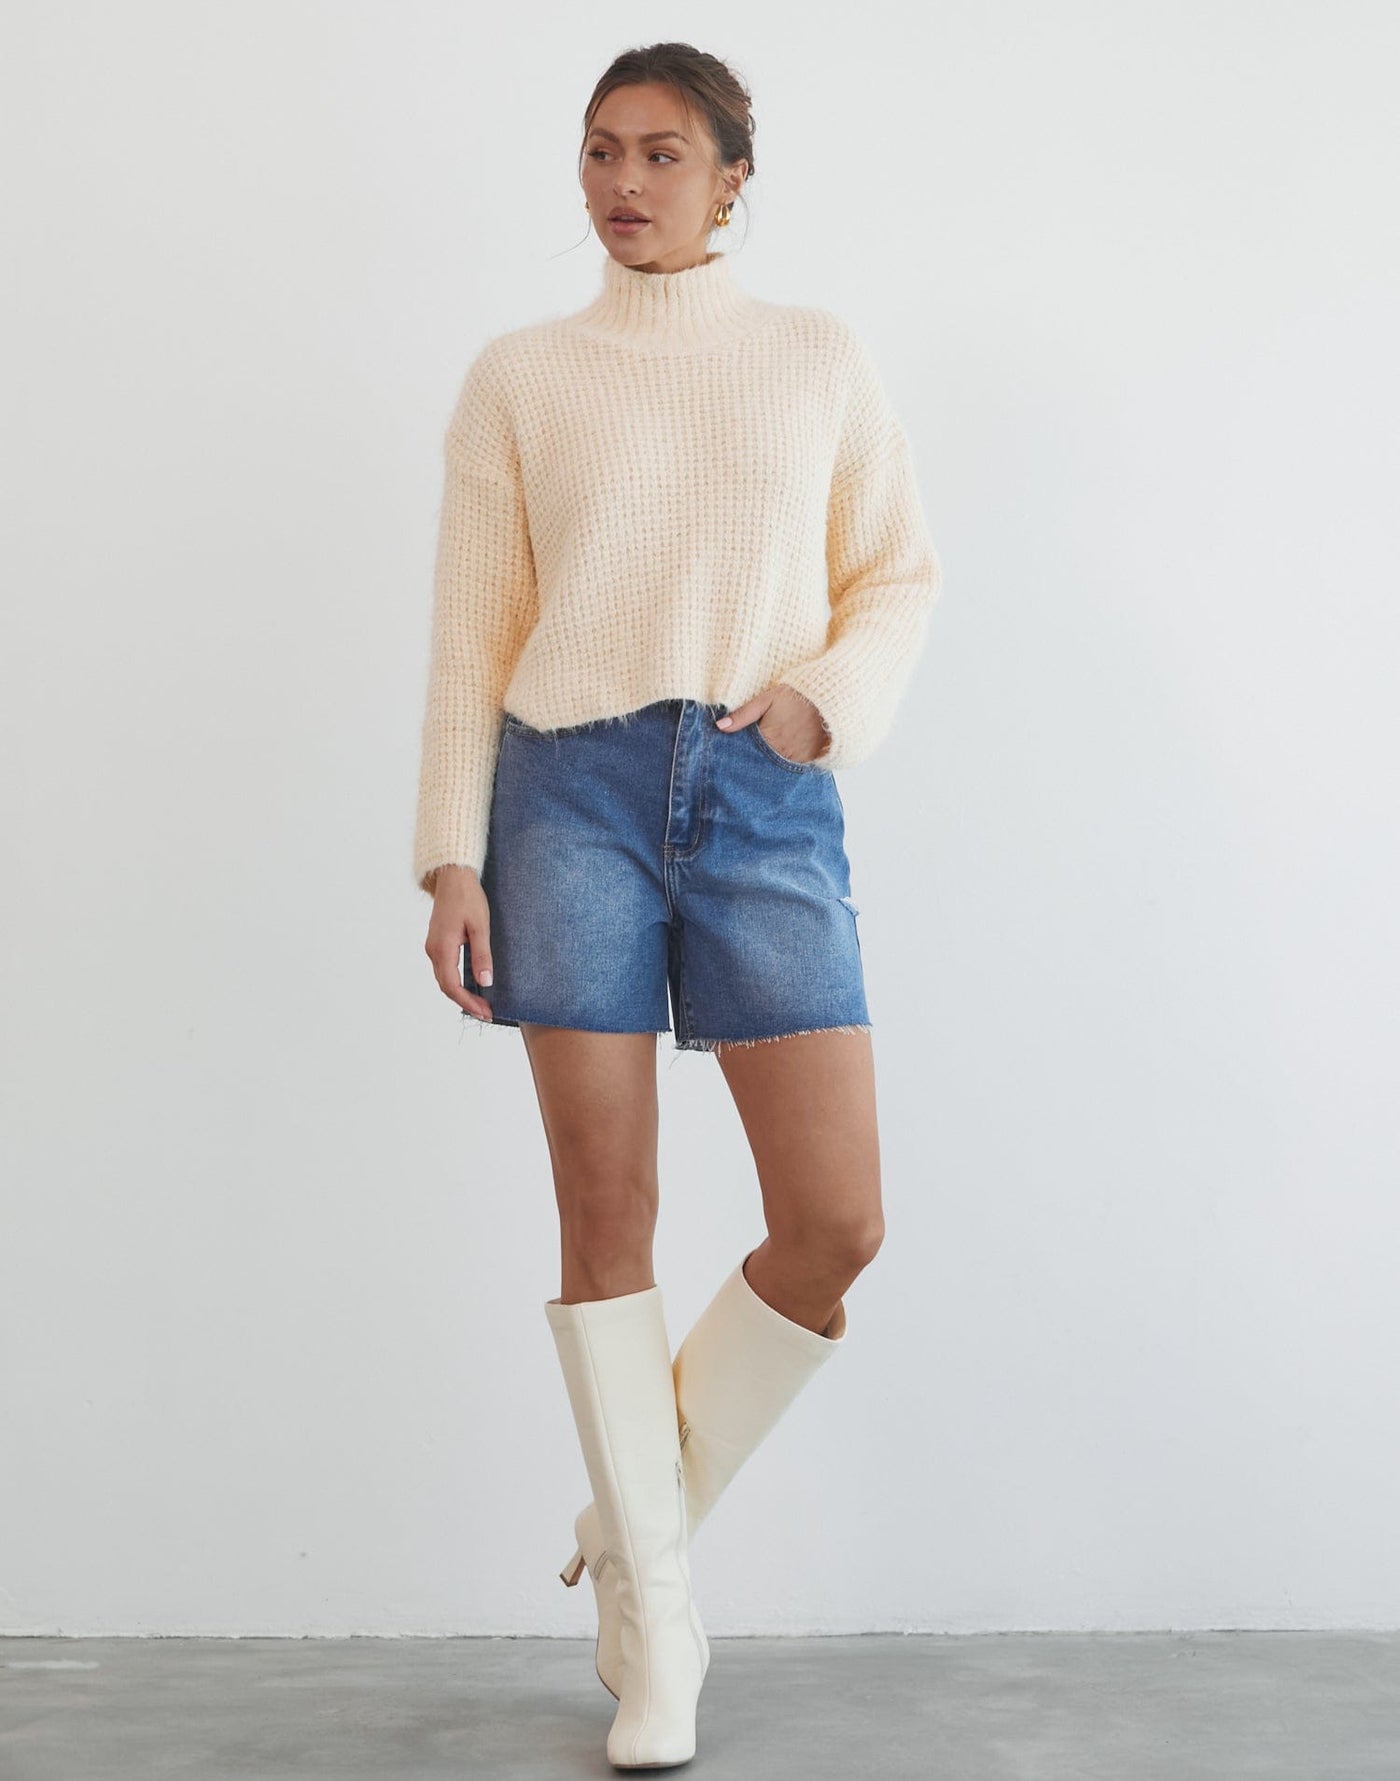 Asha Knit Jumper (Cream) - Knit High Neck Jumper - Women's Top - Charcoal Clothing